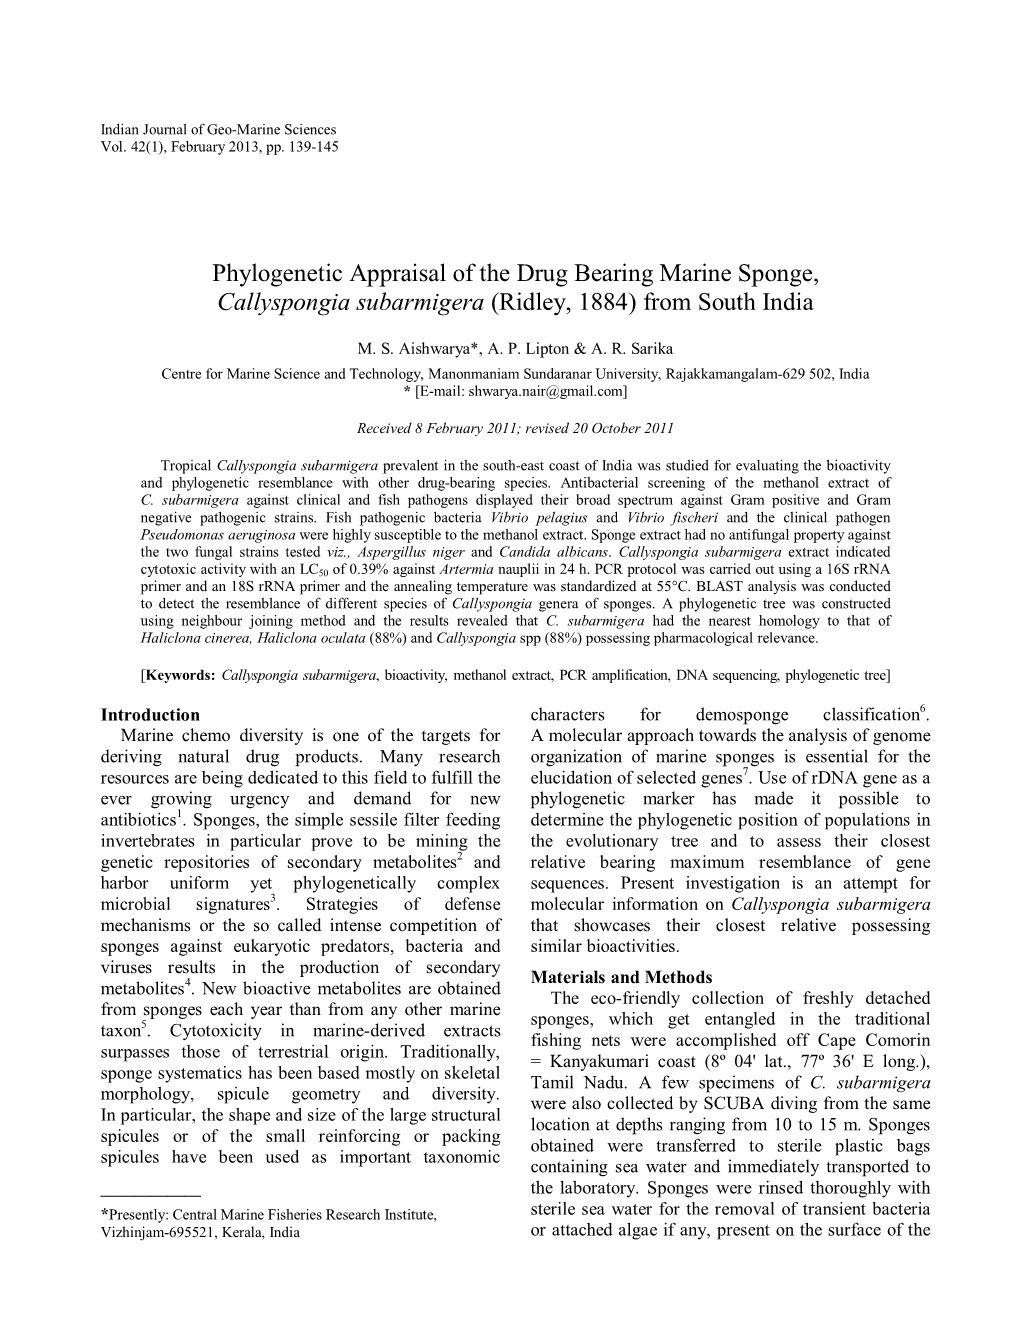 Phylogenetic Appraisal of the Drug Bearing Marine Sponge, Callyspongia Subarmigera (Ridley, 1884) from South India